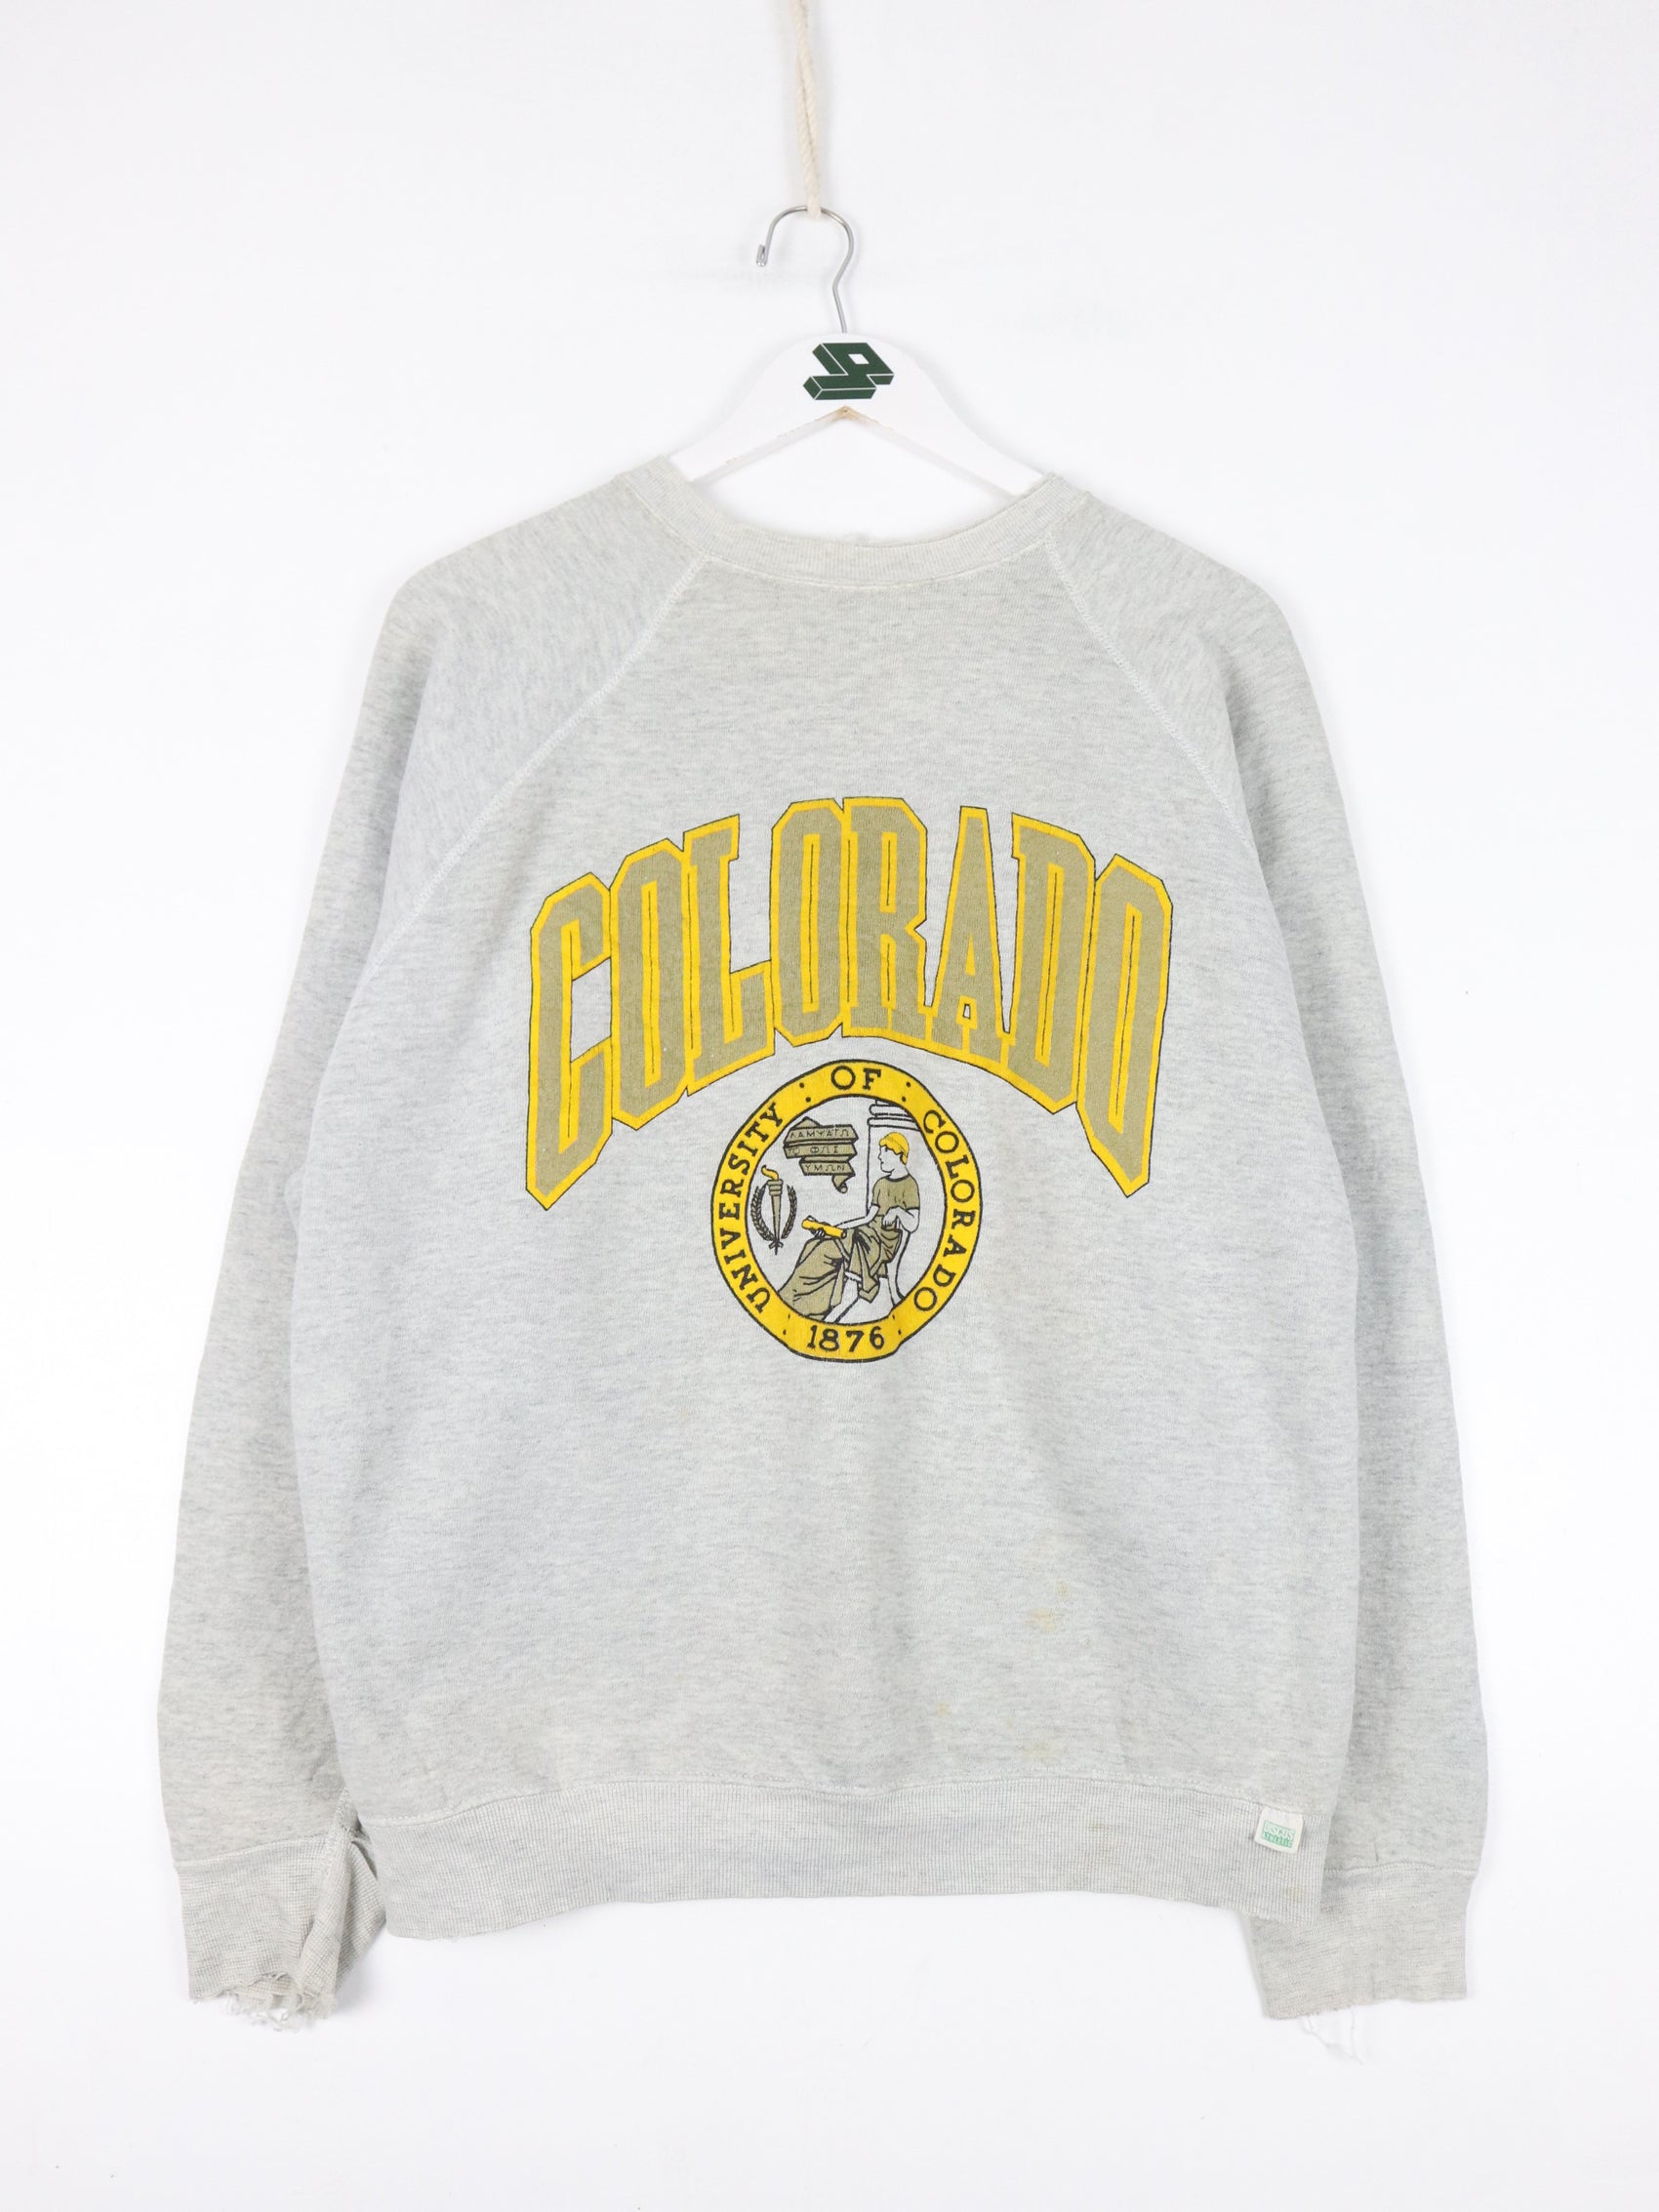 Vintage University of Colorado Sweatshirt Mens Large Grey College